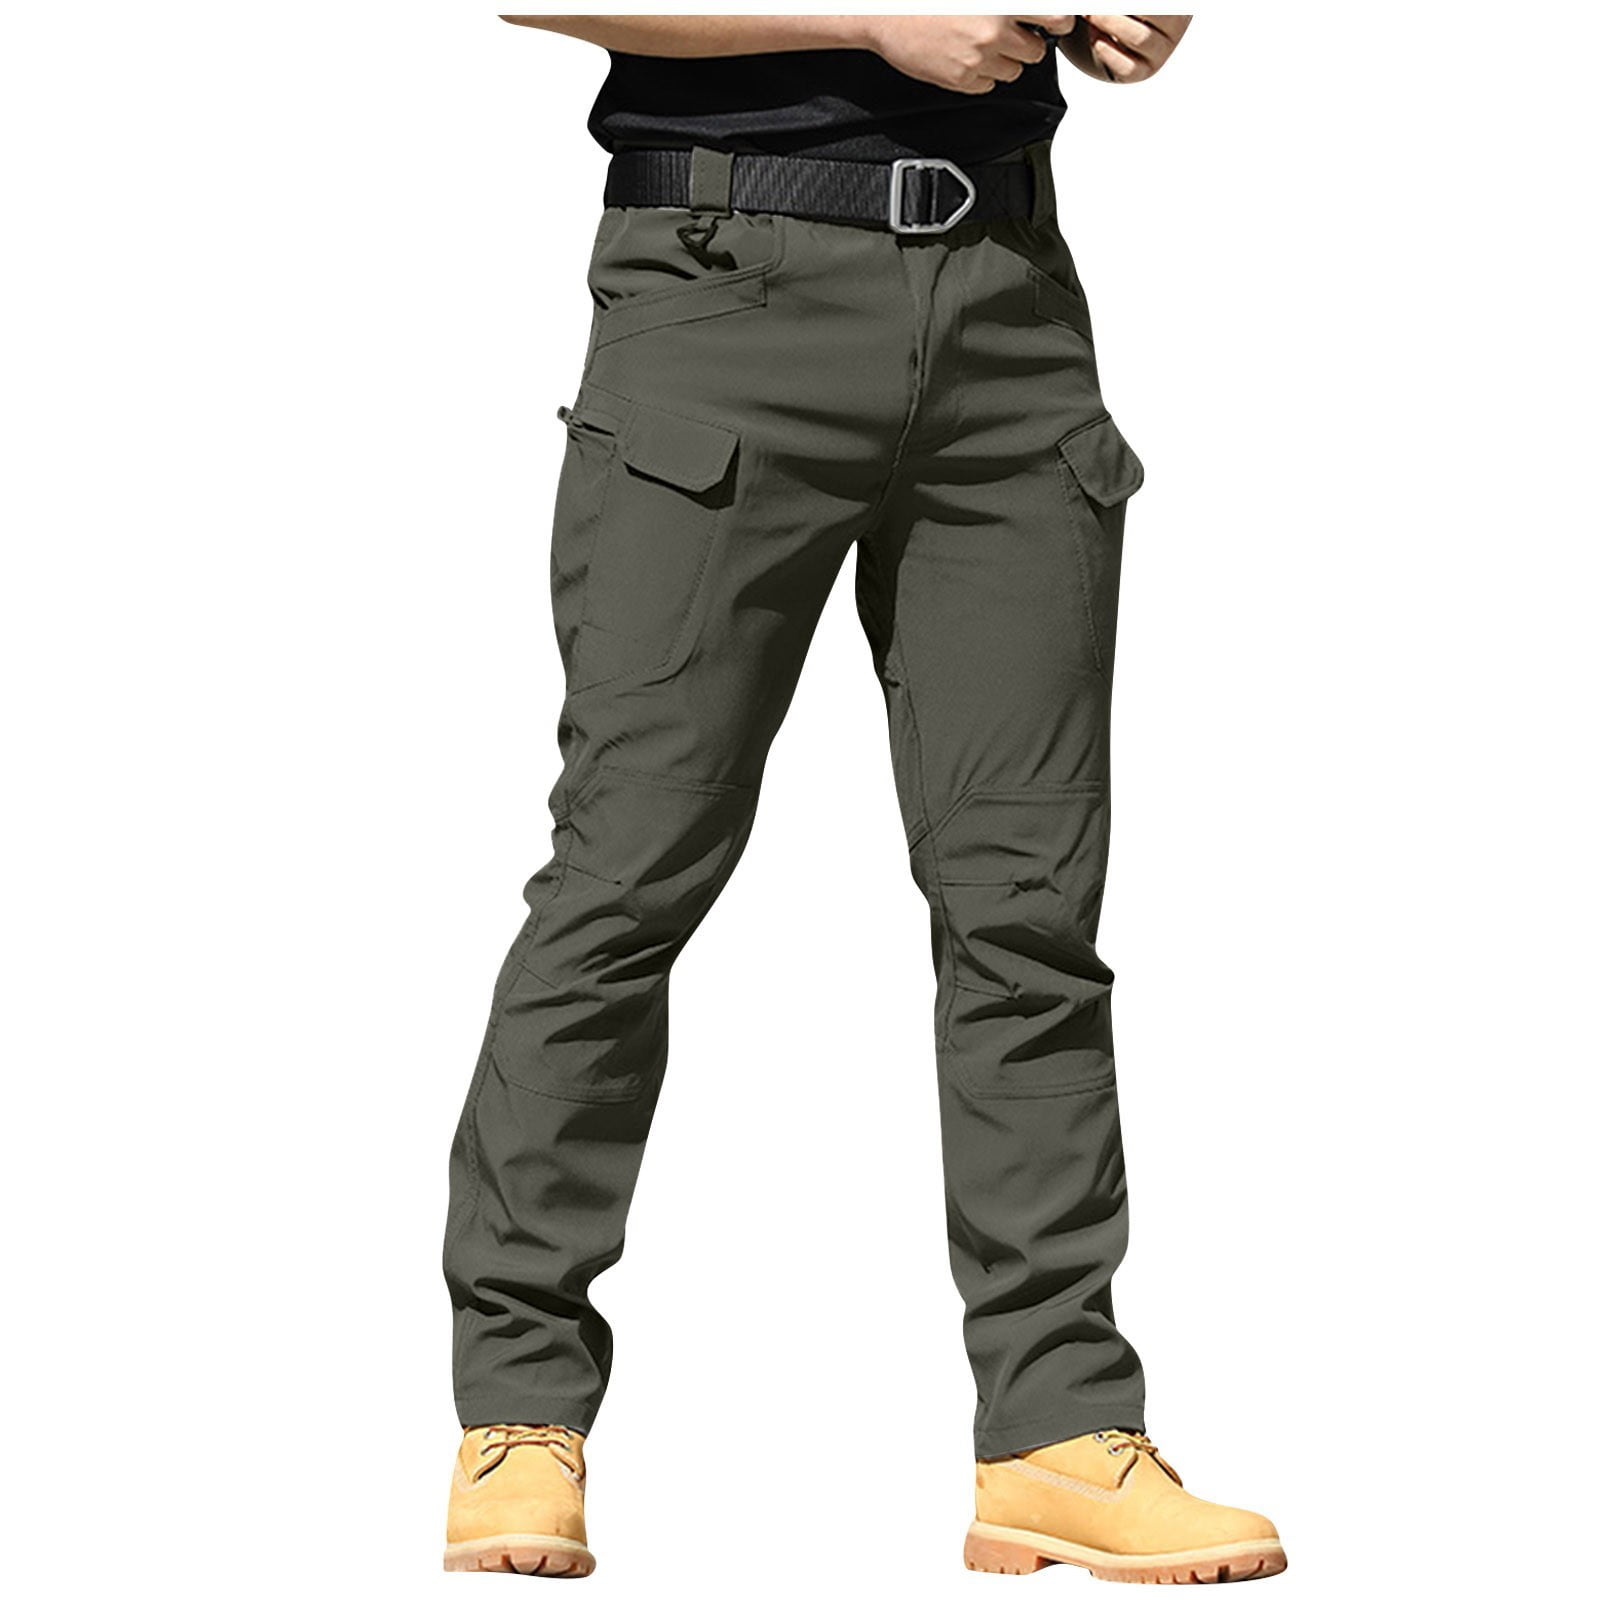 Black Cargo Pants Army Military Tactical Pants Men Work Pantalones Combat  Tactical Clothes Camo Overalls Casual Trouser - AliExpress